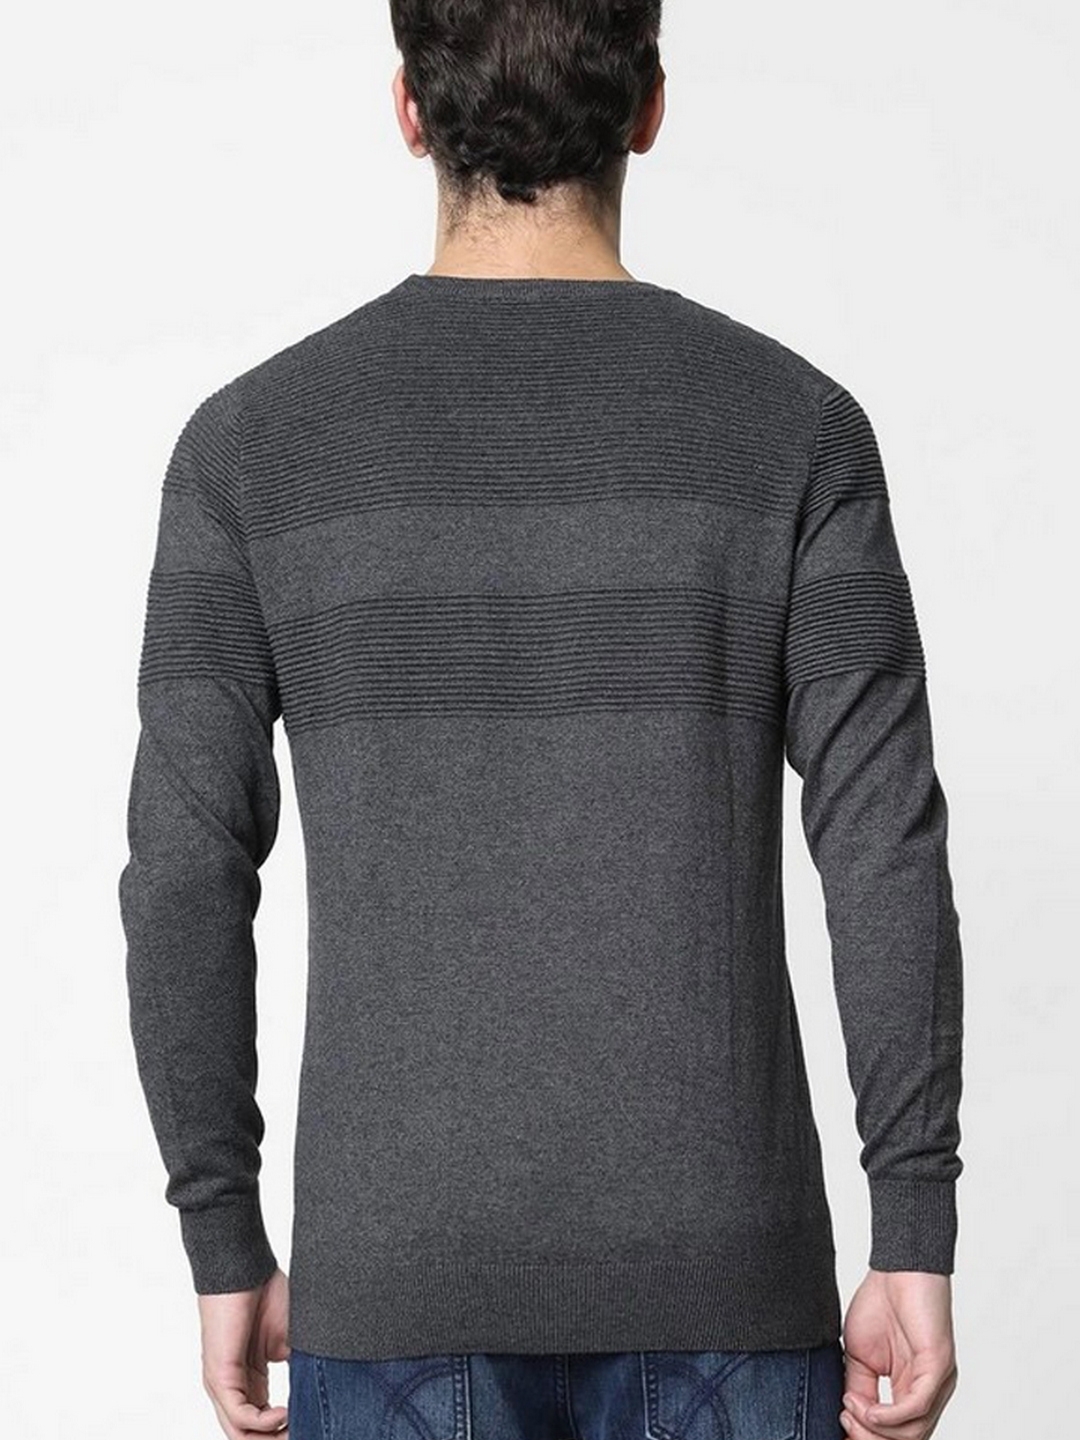 Evalds Self-Striped Crew-Neck Sweatshirt